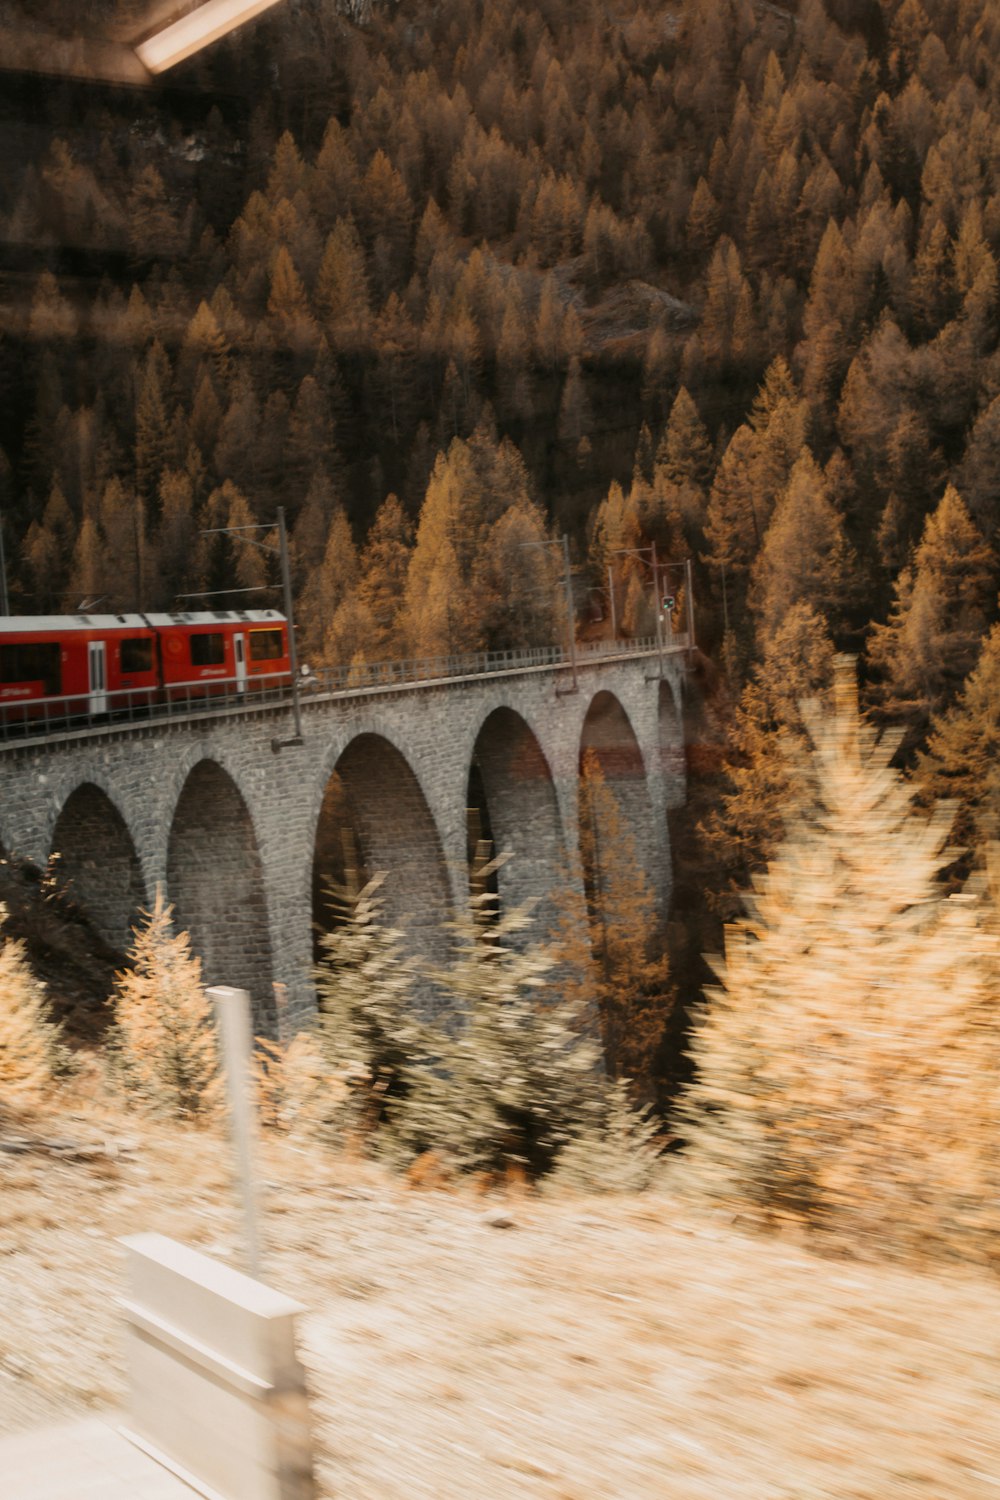 red train on gray stone bridge